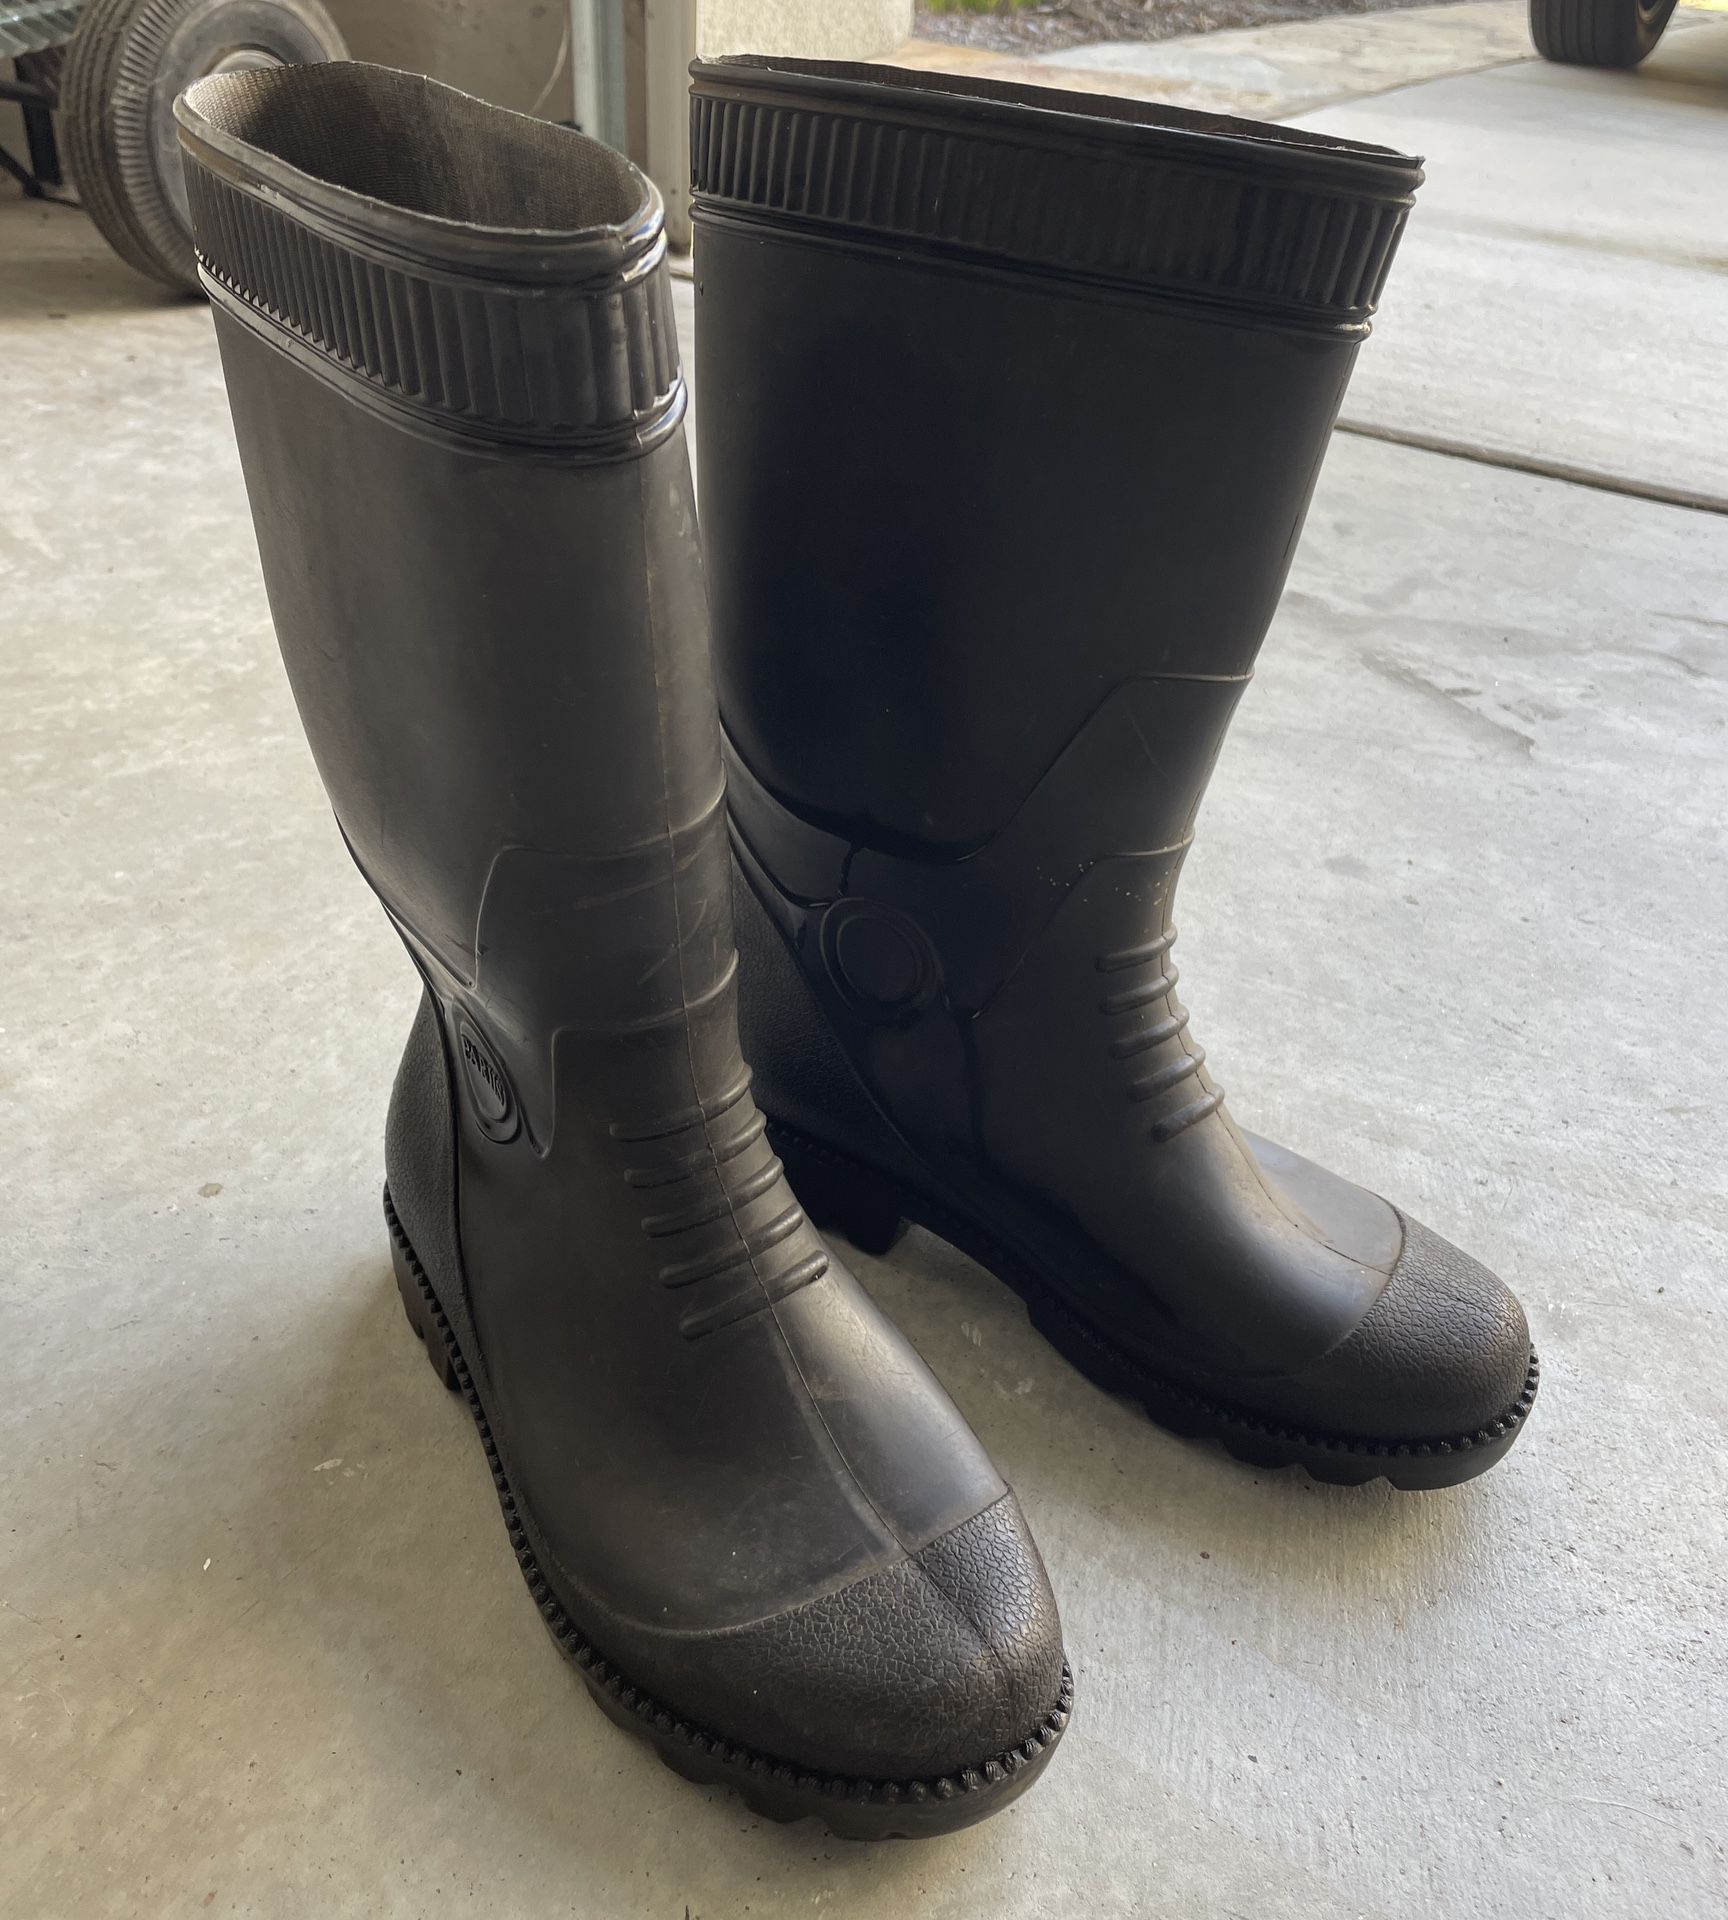 Rubber Rain Boots Women Size 8 - Perfect Condition 